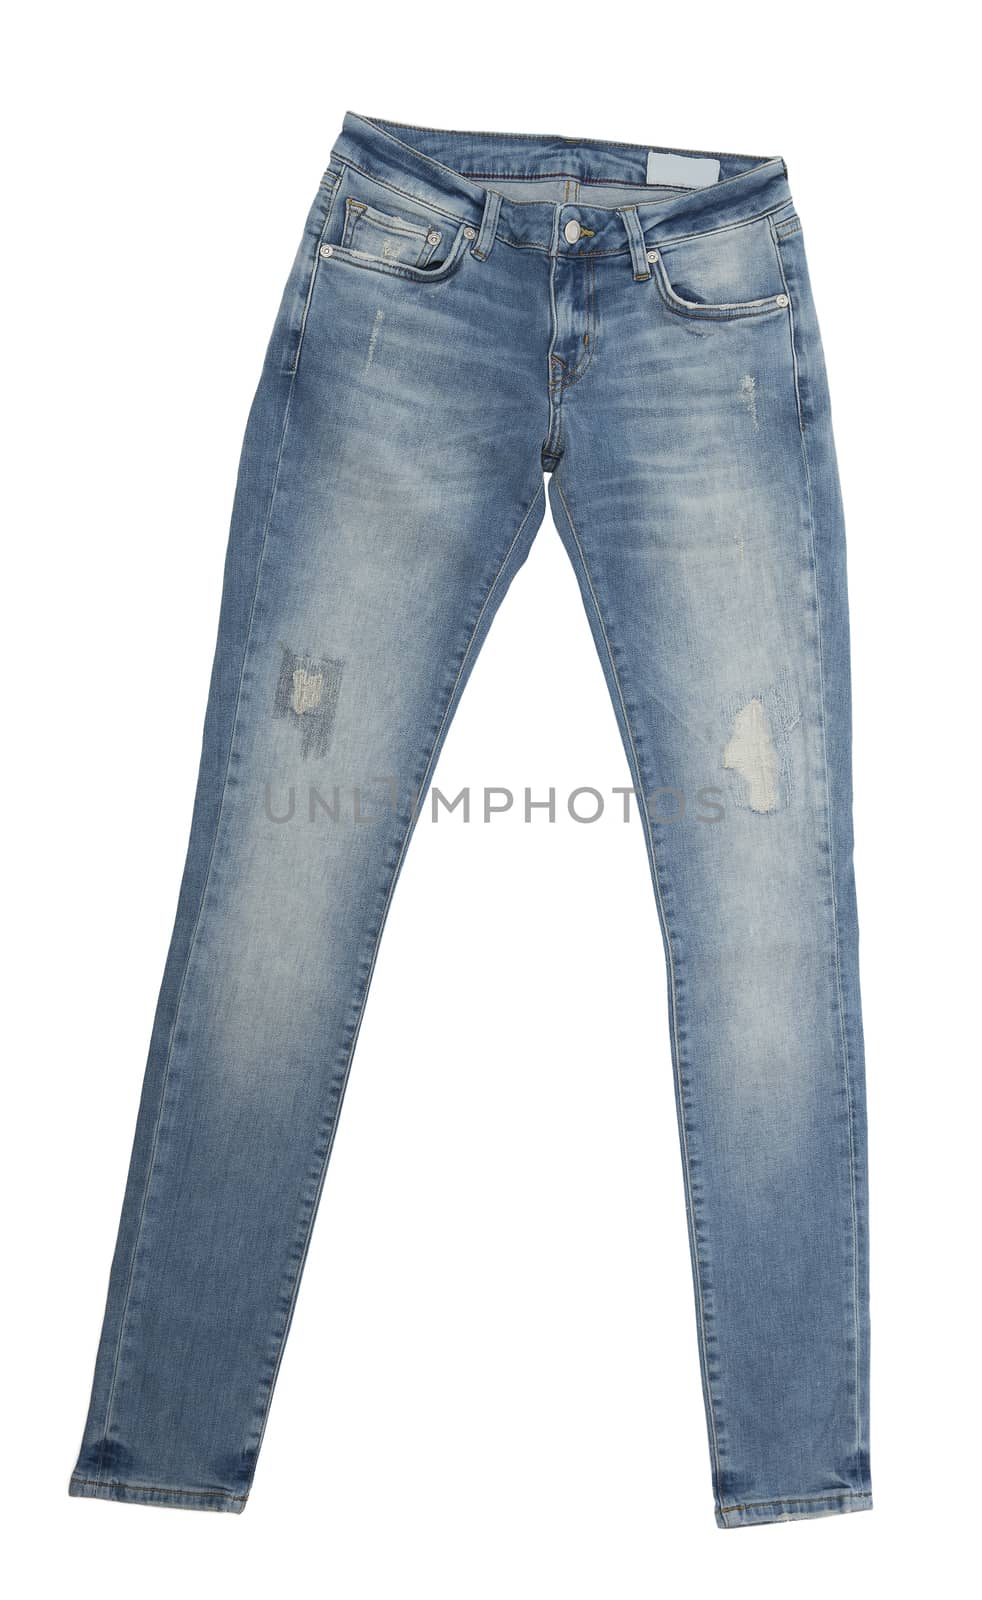 Blue jeans by gemenacom